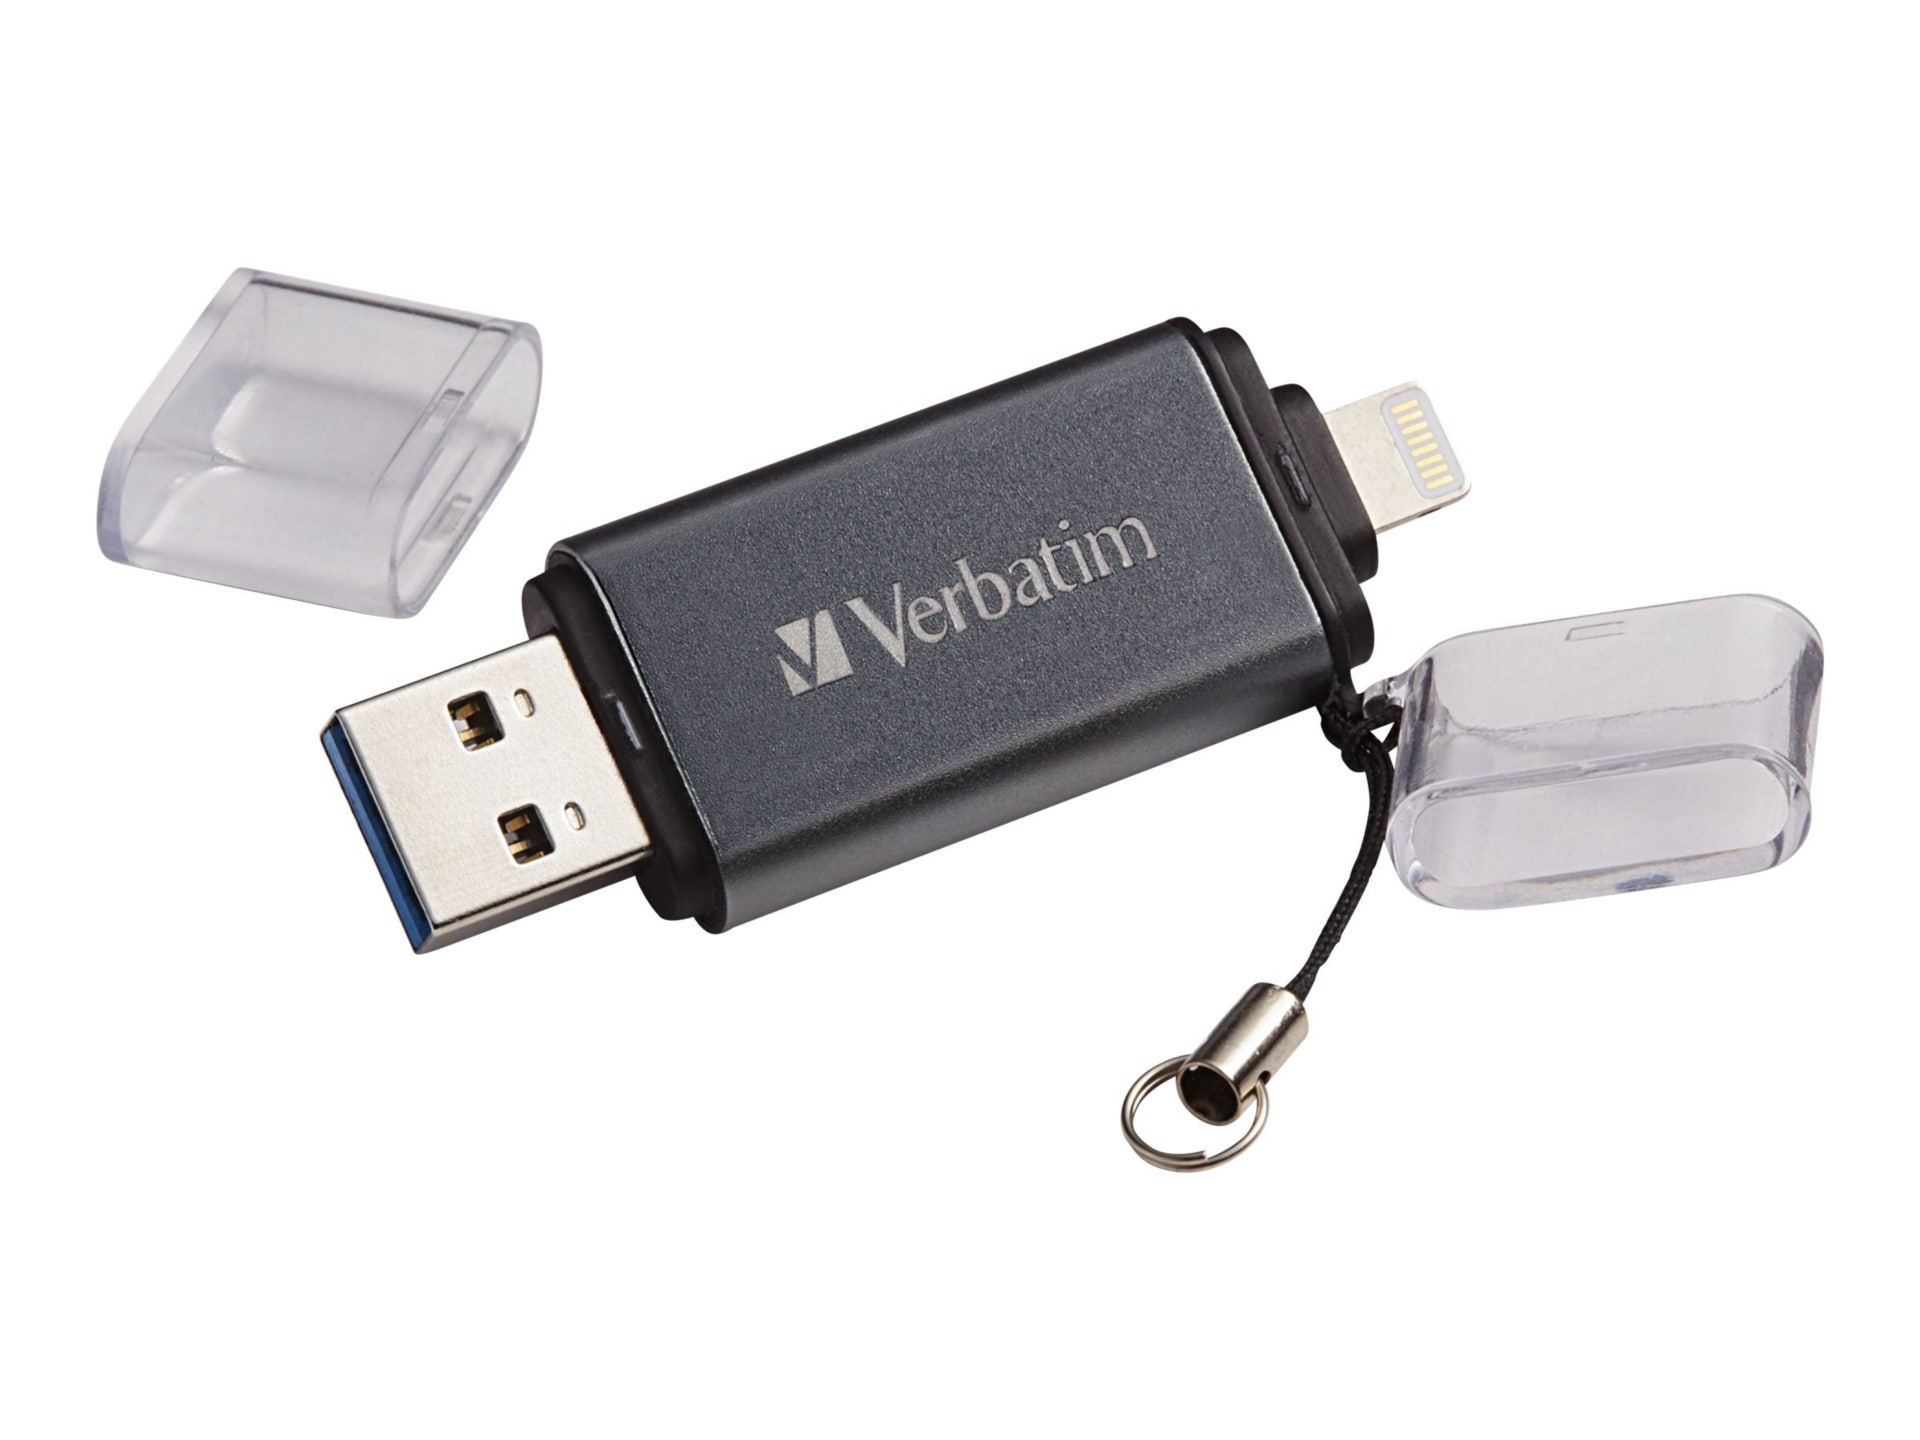 Verbatim Store 'n' Go Dual USB Flash Drive for Lightning Devices - USB flas